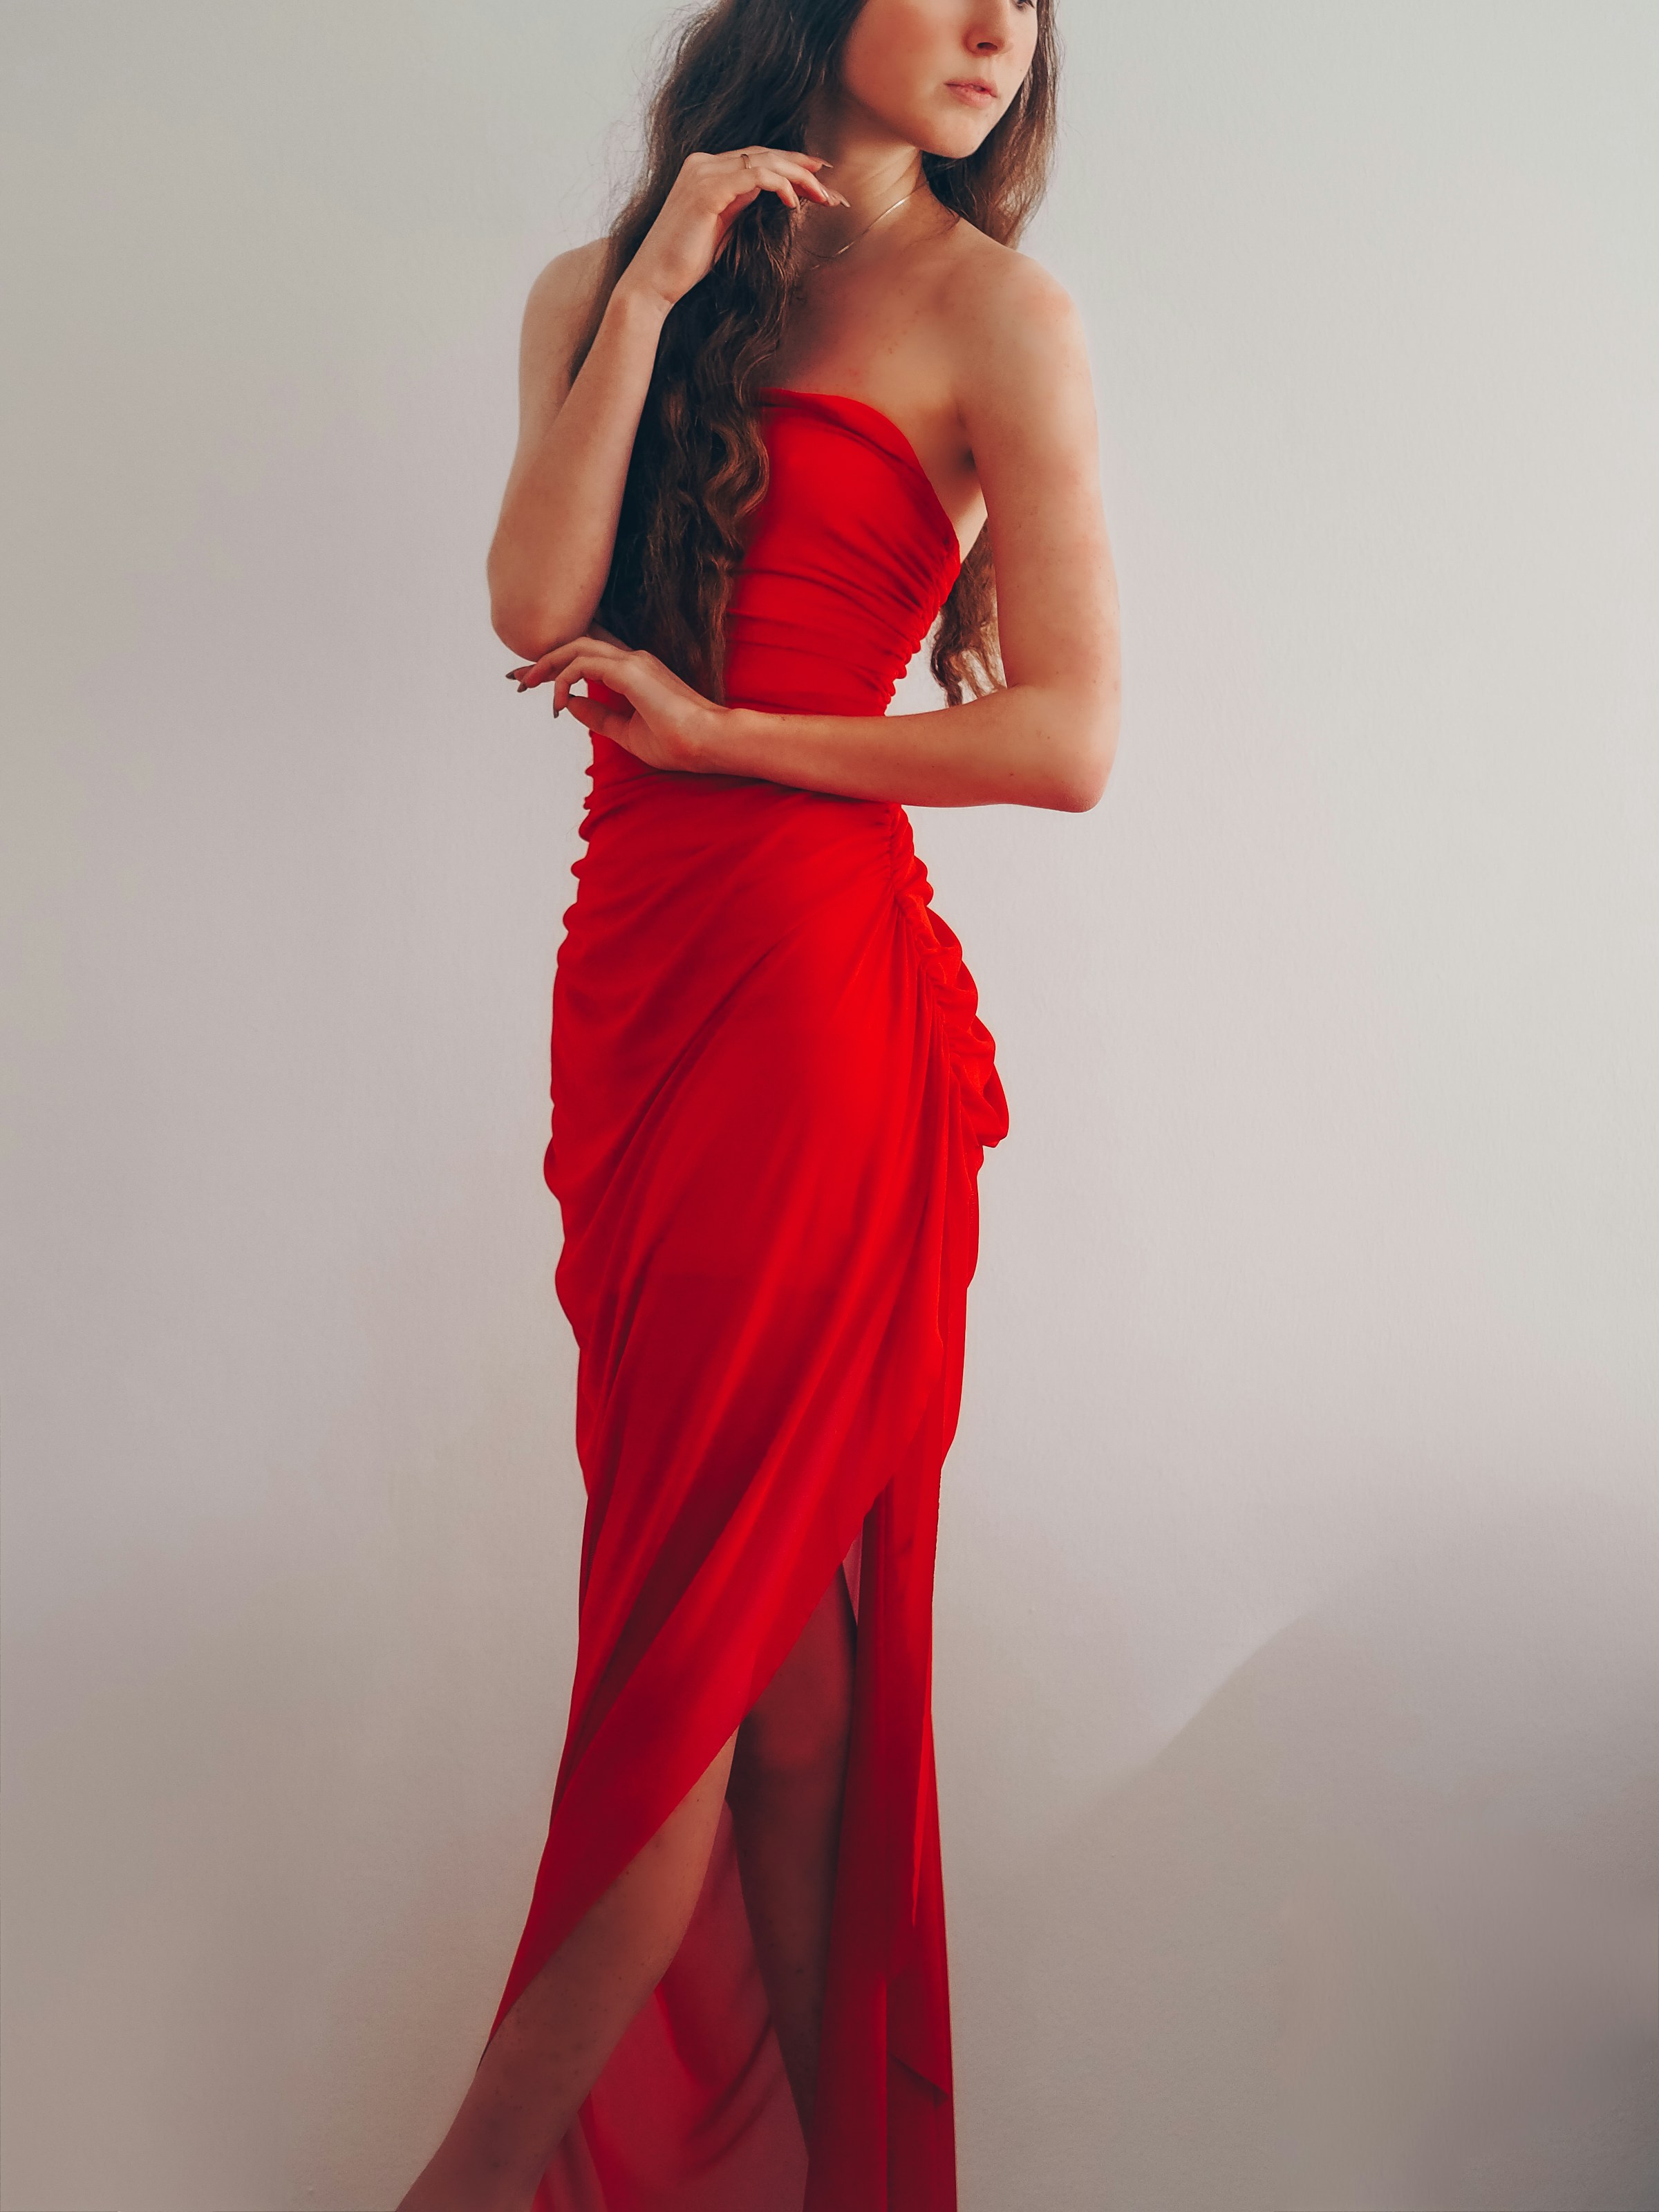 Une fille en robe rouge | Source : Unsplash